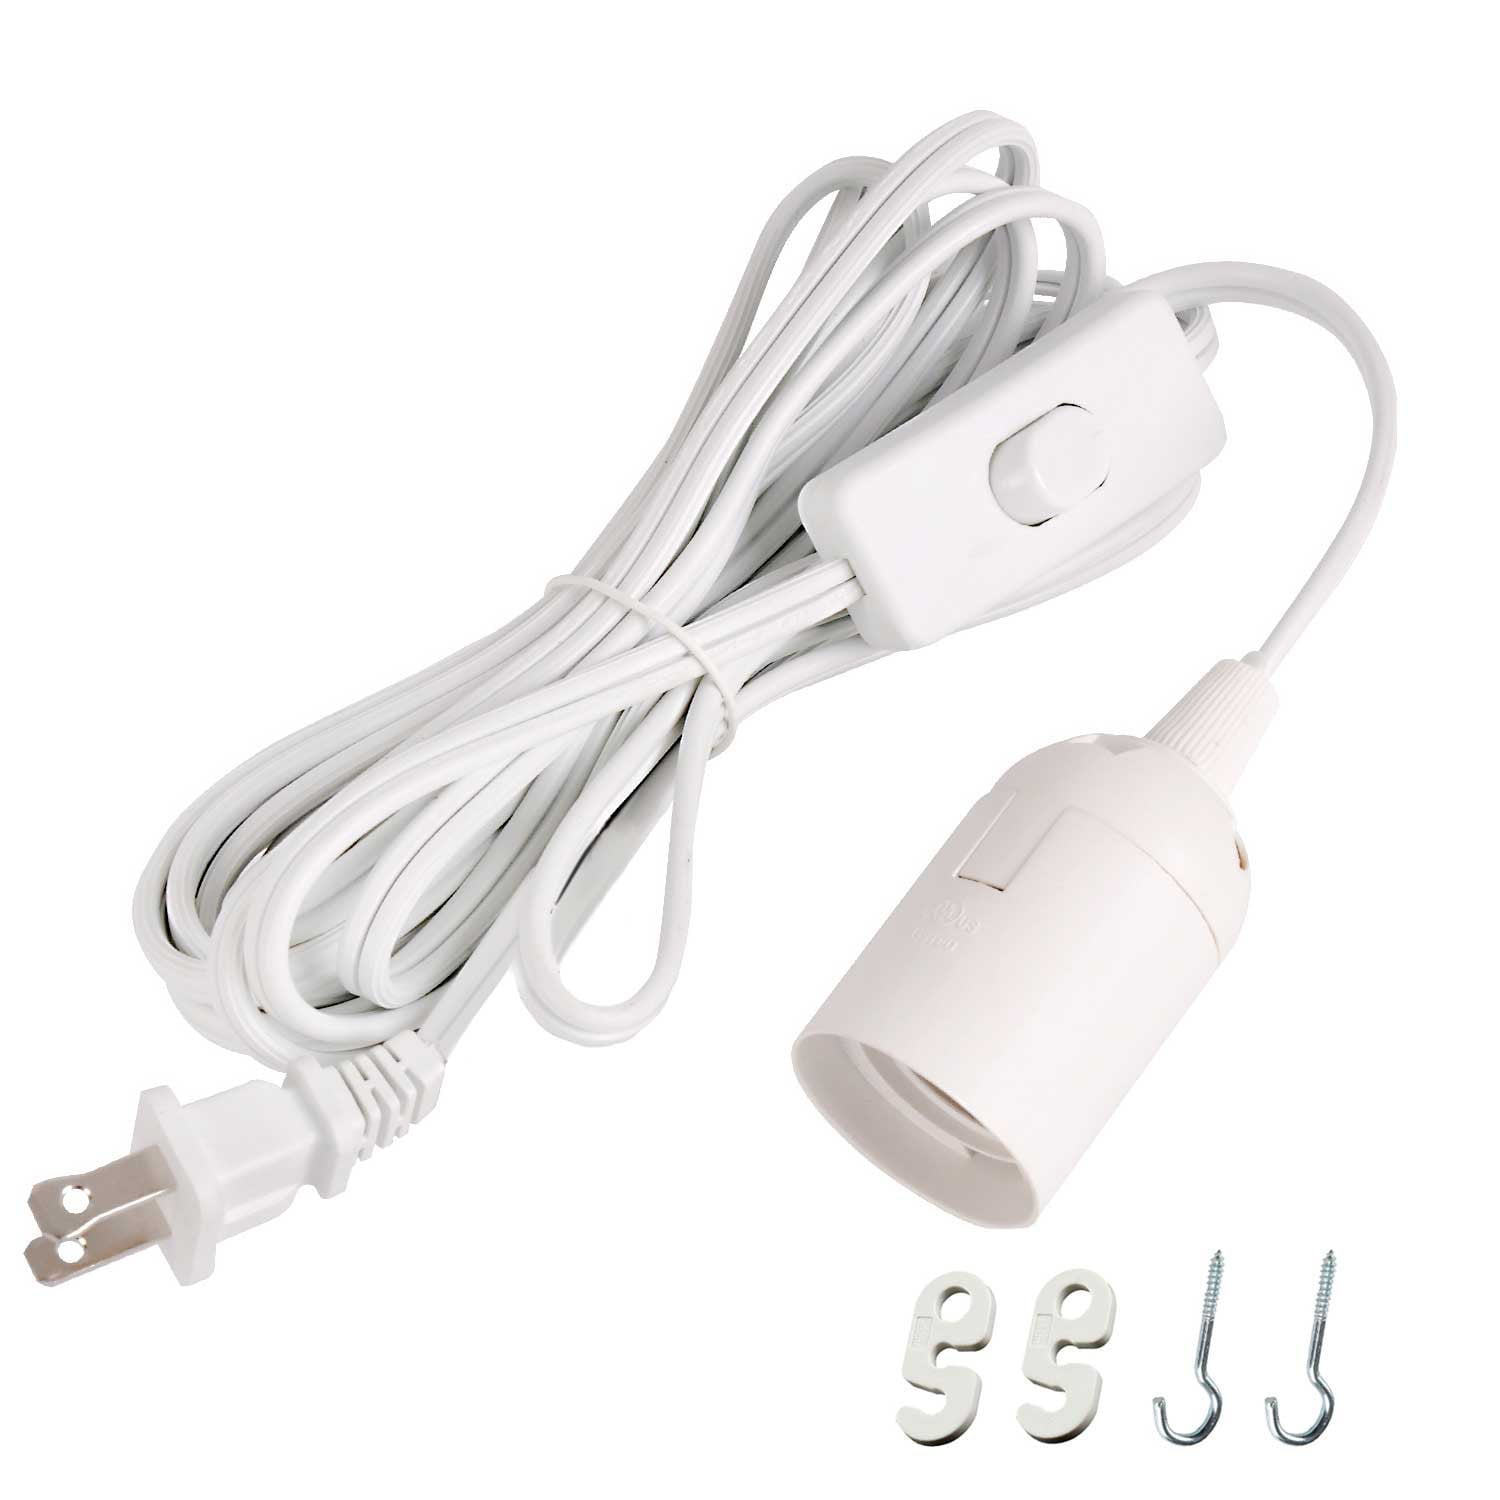 2 Pack Plug-in Pendant Light Cord 15FT Vintage Hanging Light Cord E26/E27 Light Socket Black Light Kit with On/Off Switch